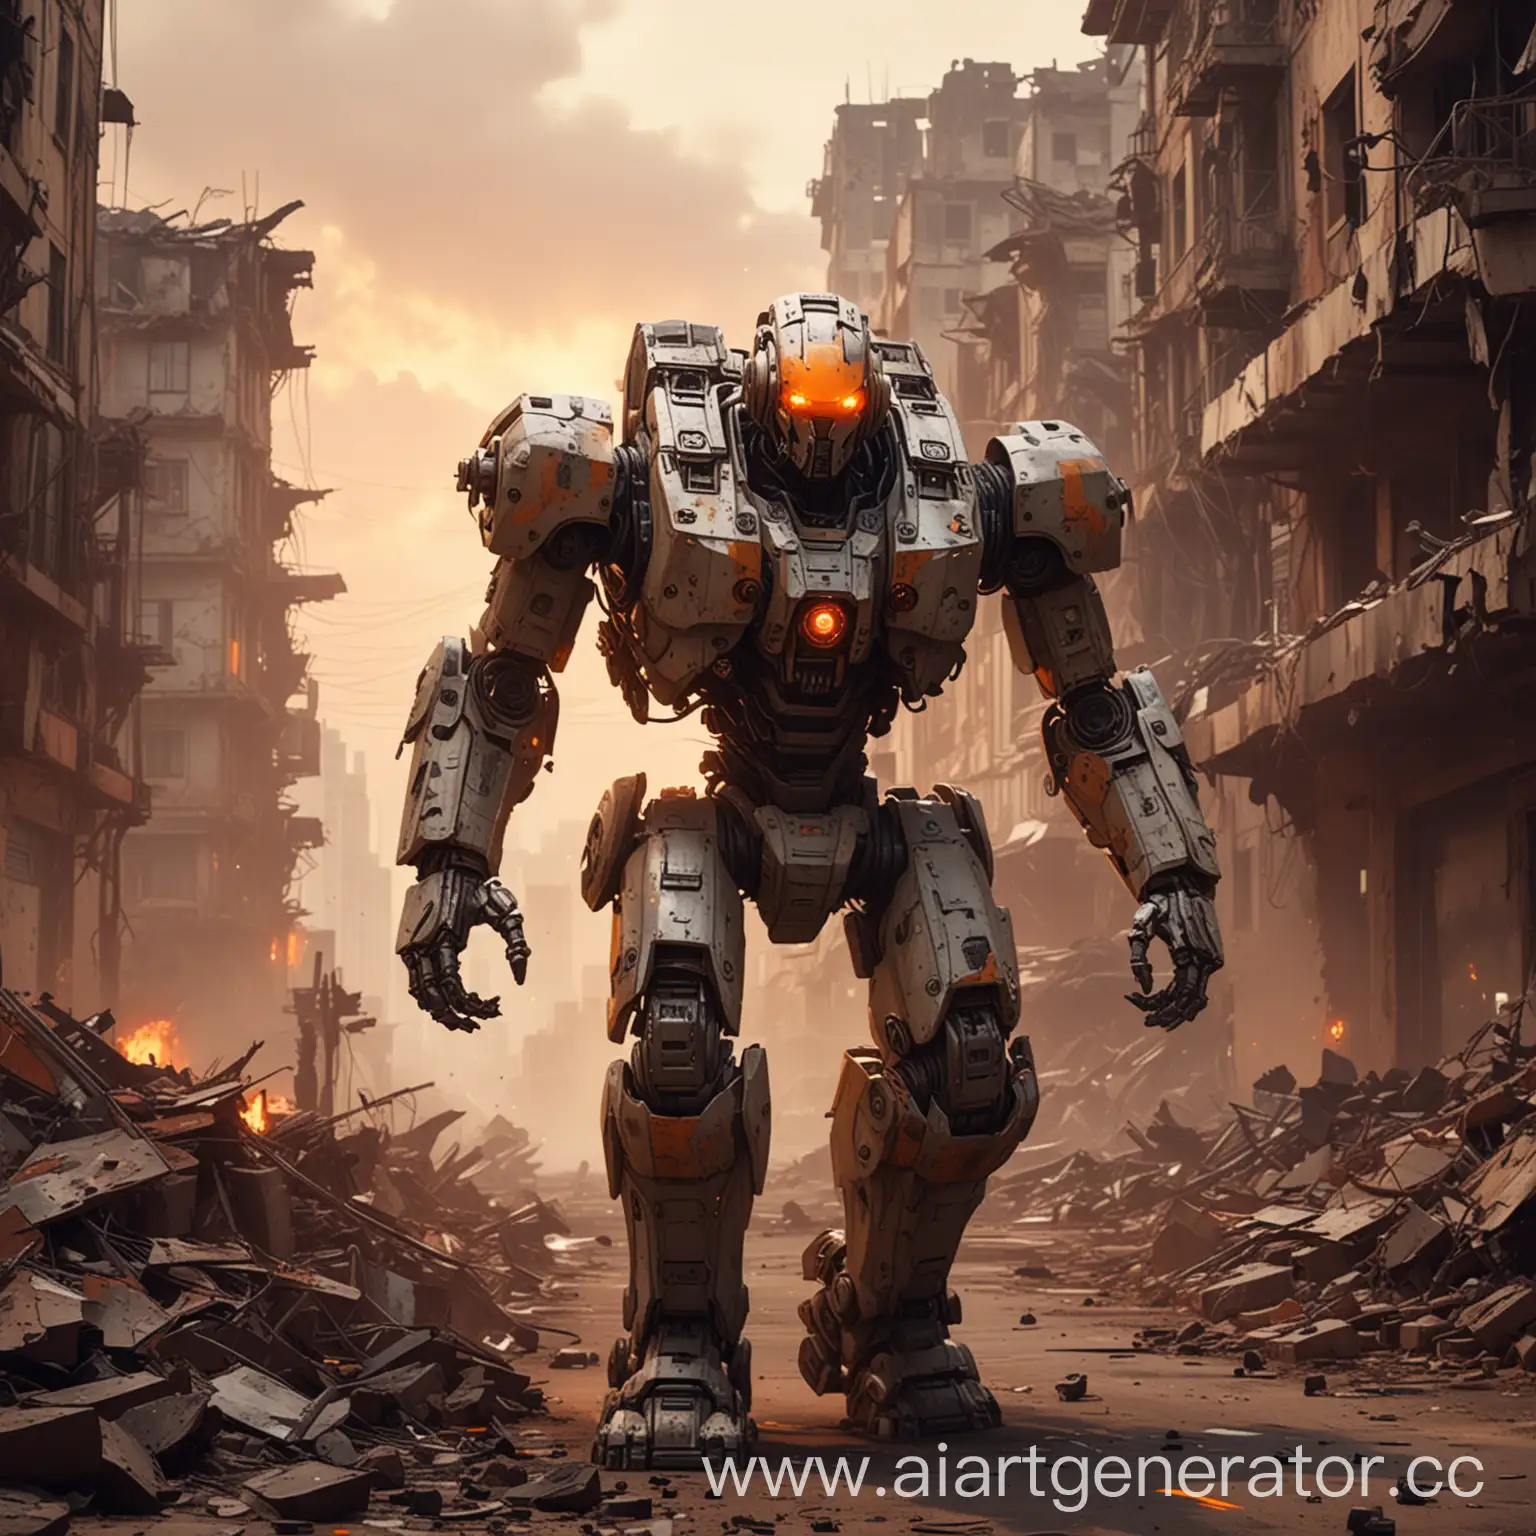 Giant-RobotMech-with-Glowing-Orange-Eyes-Walking-Amidst-Devastation